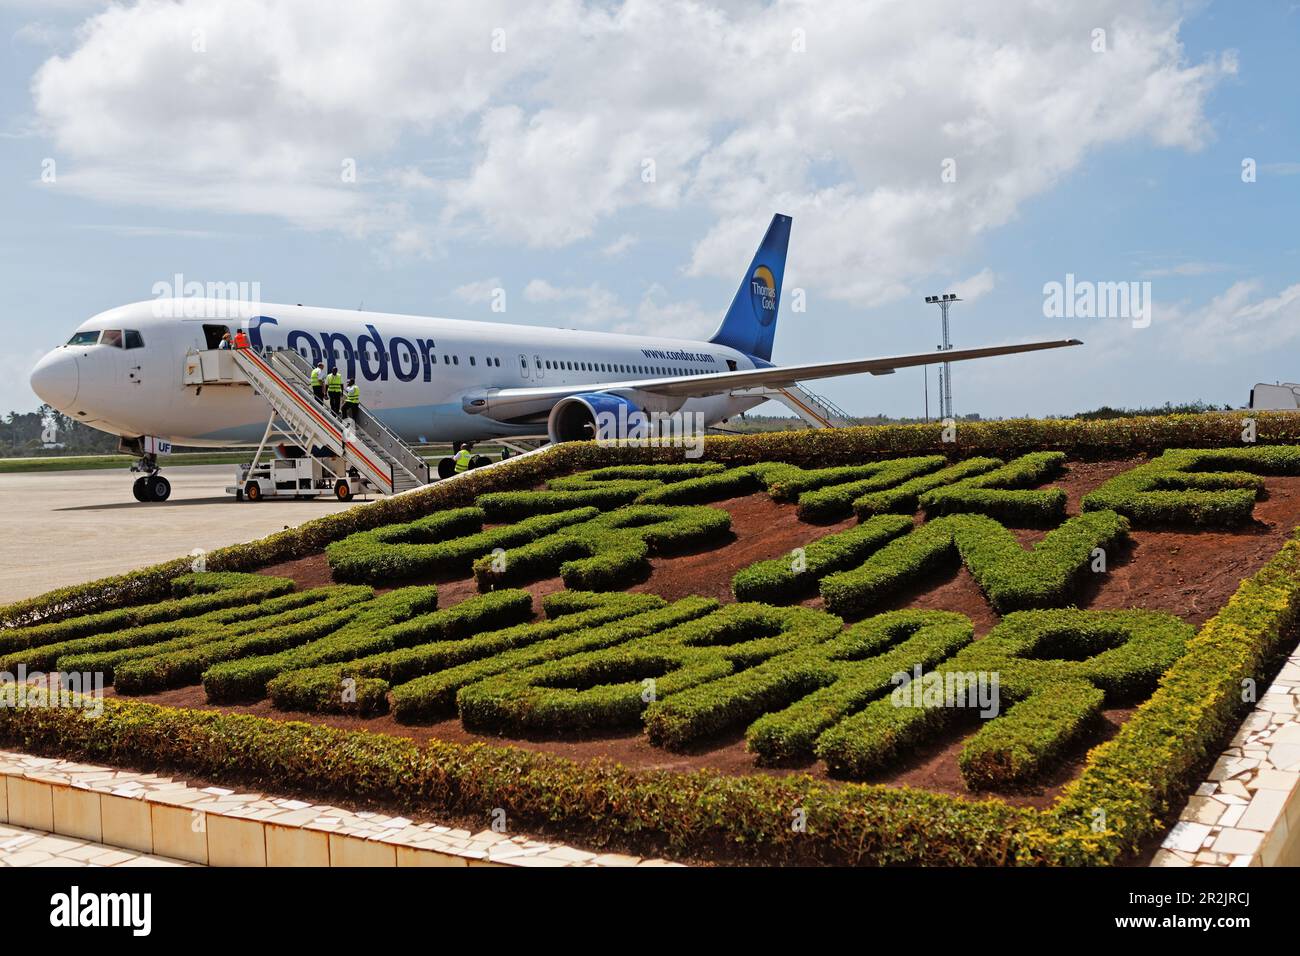 Patch and aircraft at the airport, Zanzibar, Tanzania, Africa Stock Photo